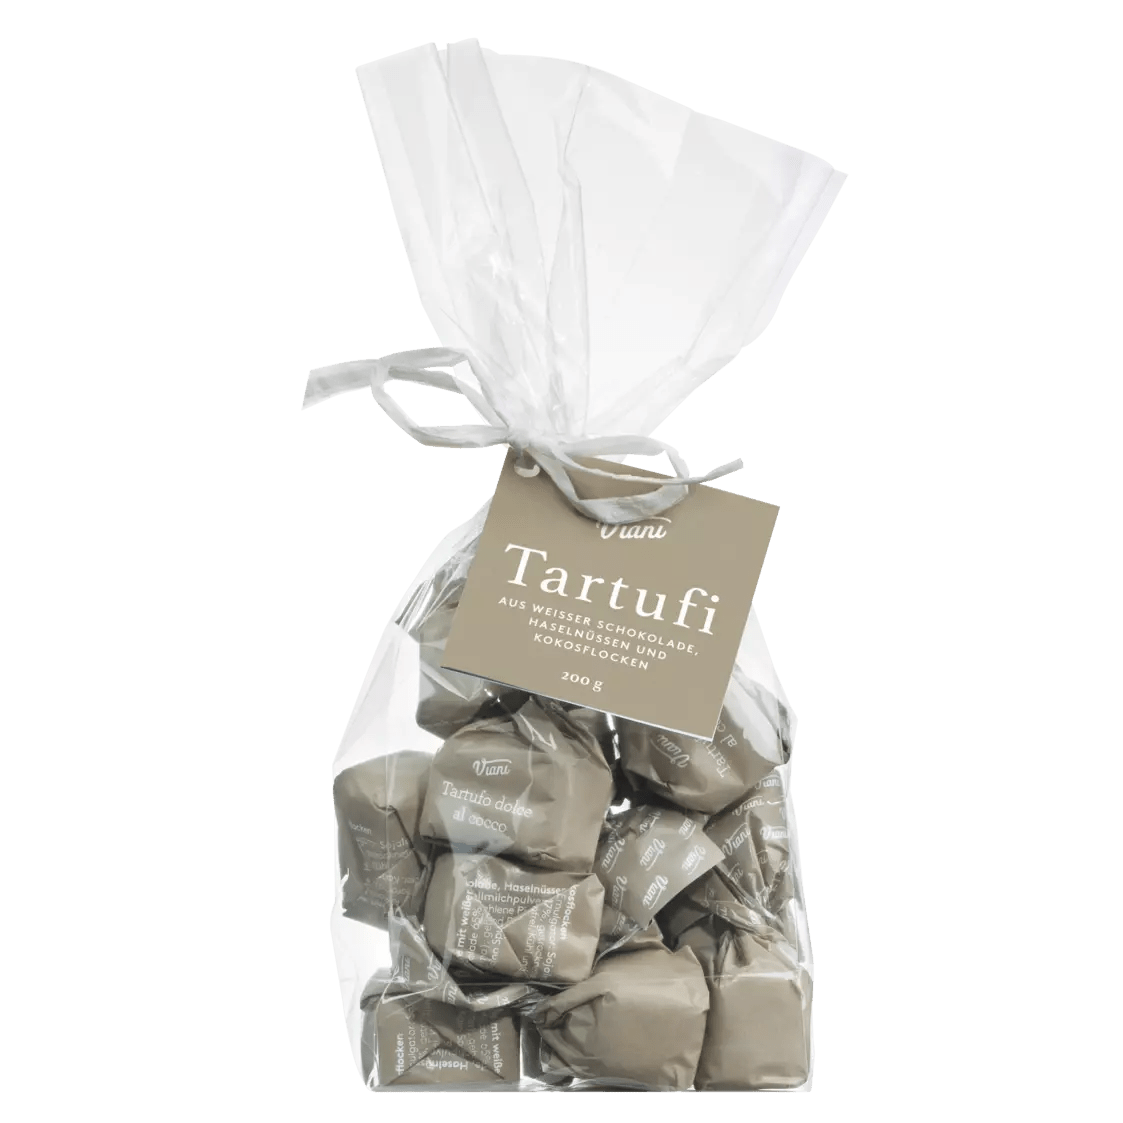 Tartufi dolci al coco (200g) - Gourmet Markt - Viani